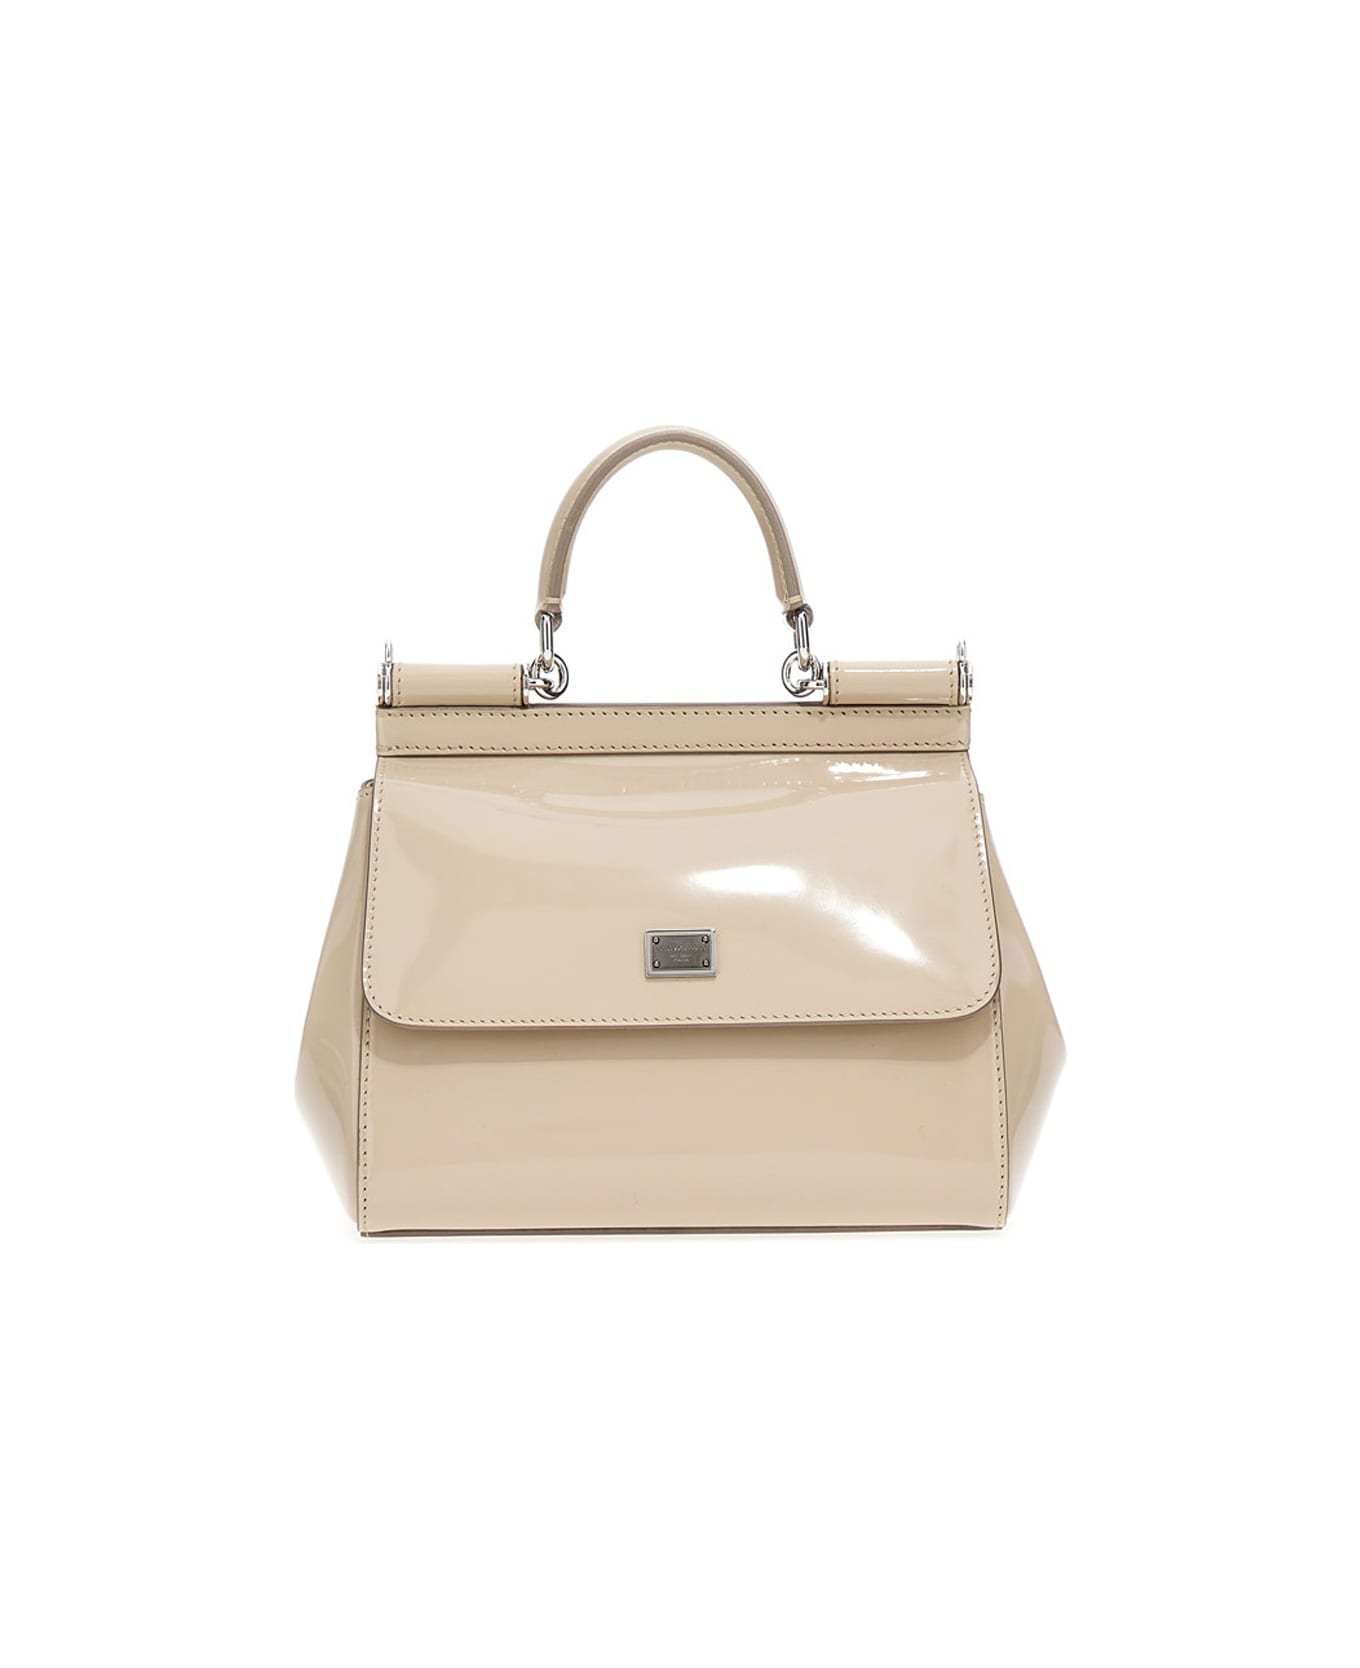 Dolce & Gabbana Logo Leather Handbag - Beige トートバッグ